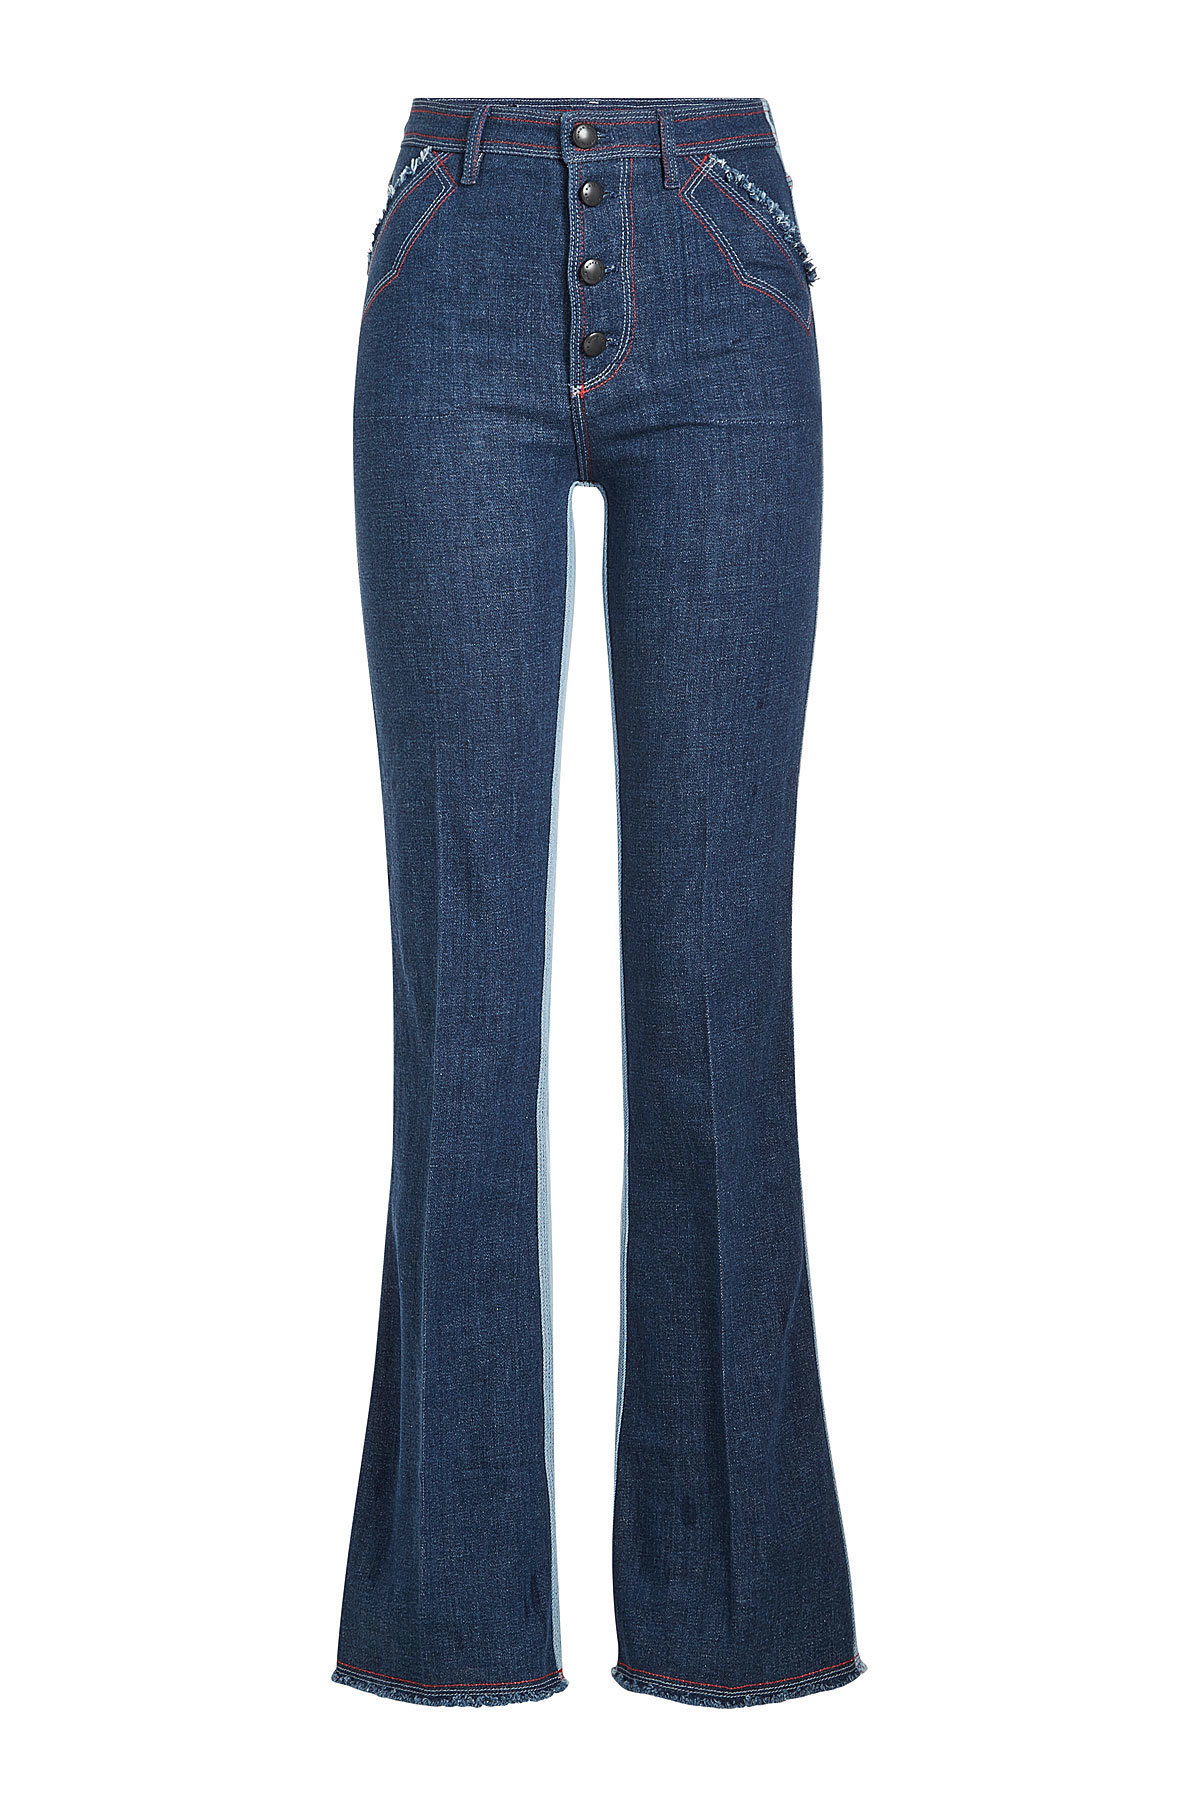 Two-Tone Flared Jeans by Sonia Rykiel